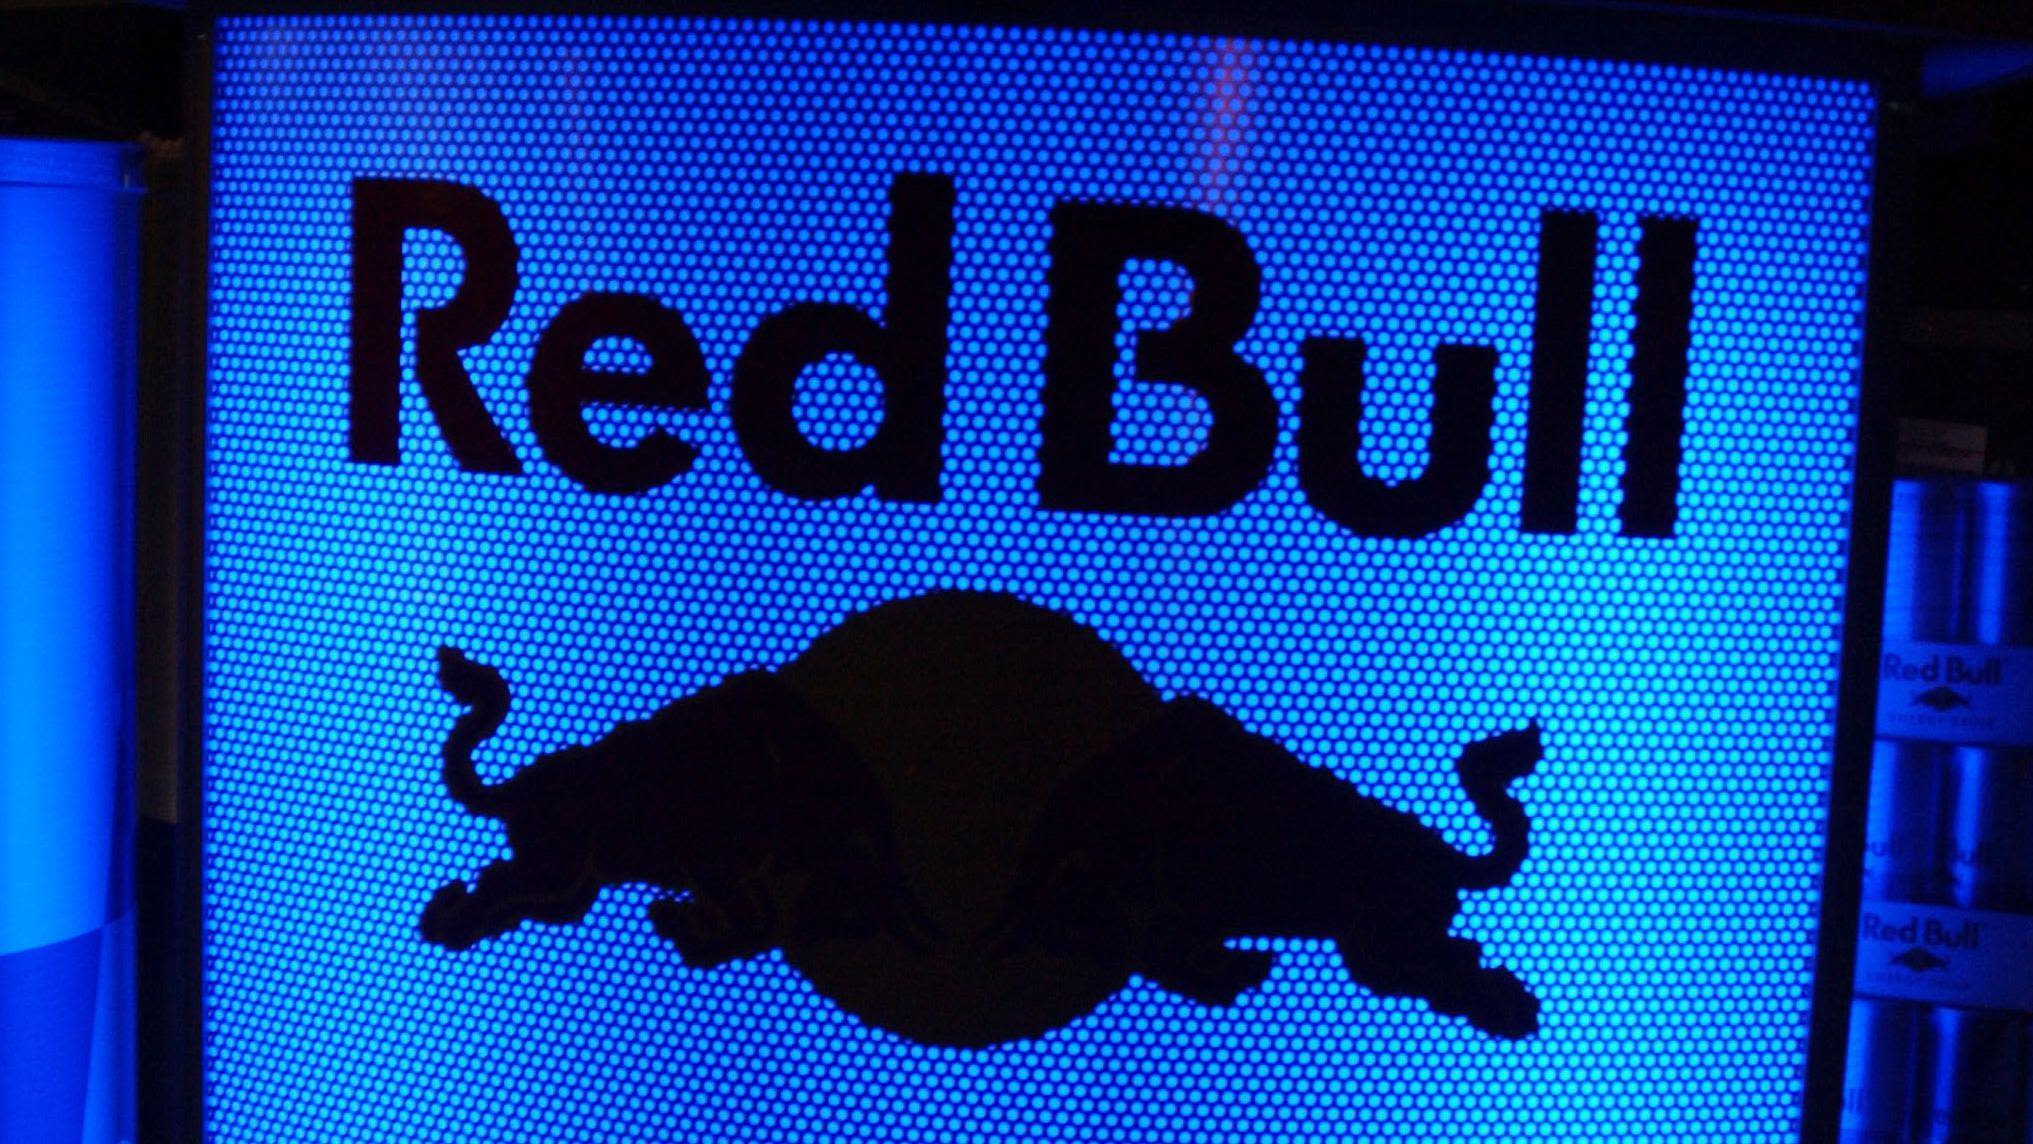 Red Bull takes minority ownership stake in Leeds